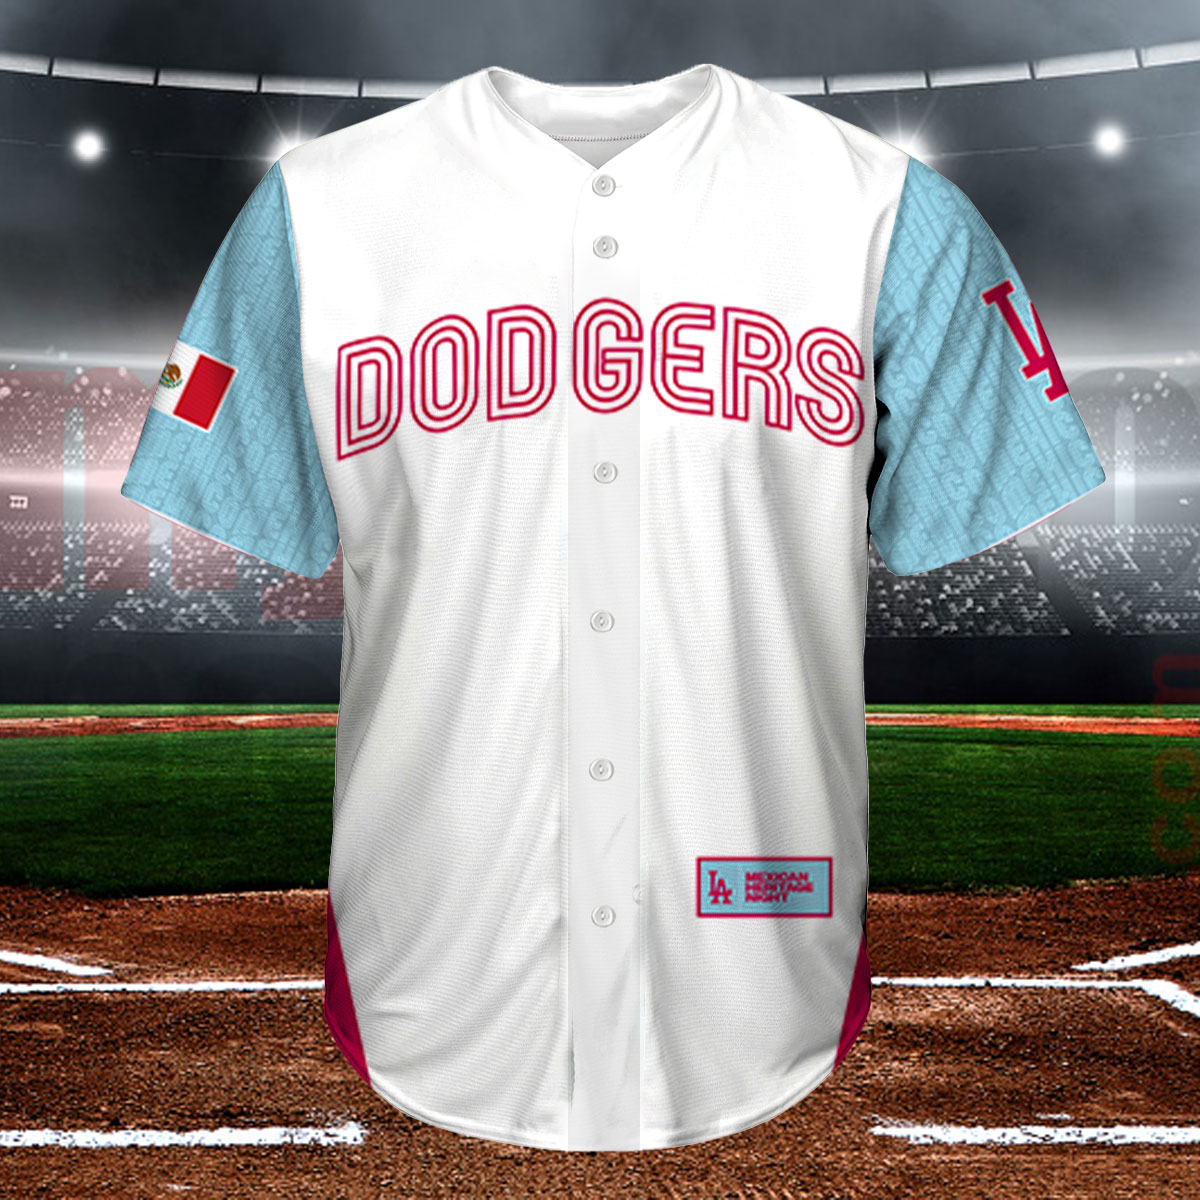 Endastore Korean Heritage Night Dodgers Jersey Shirt Giveaway 2023